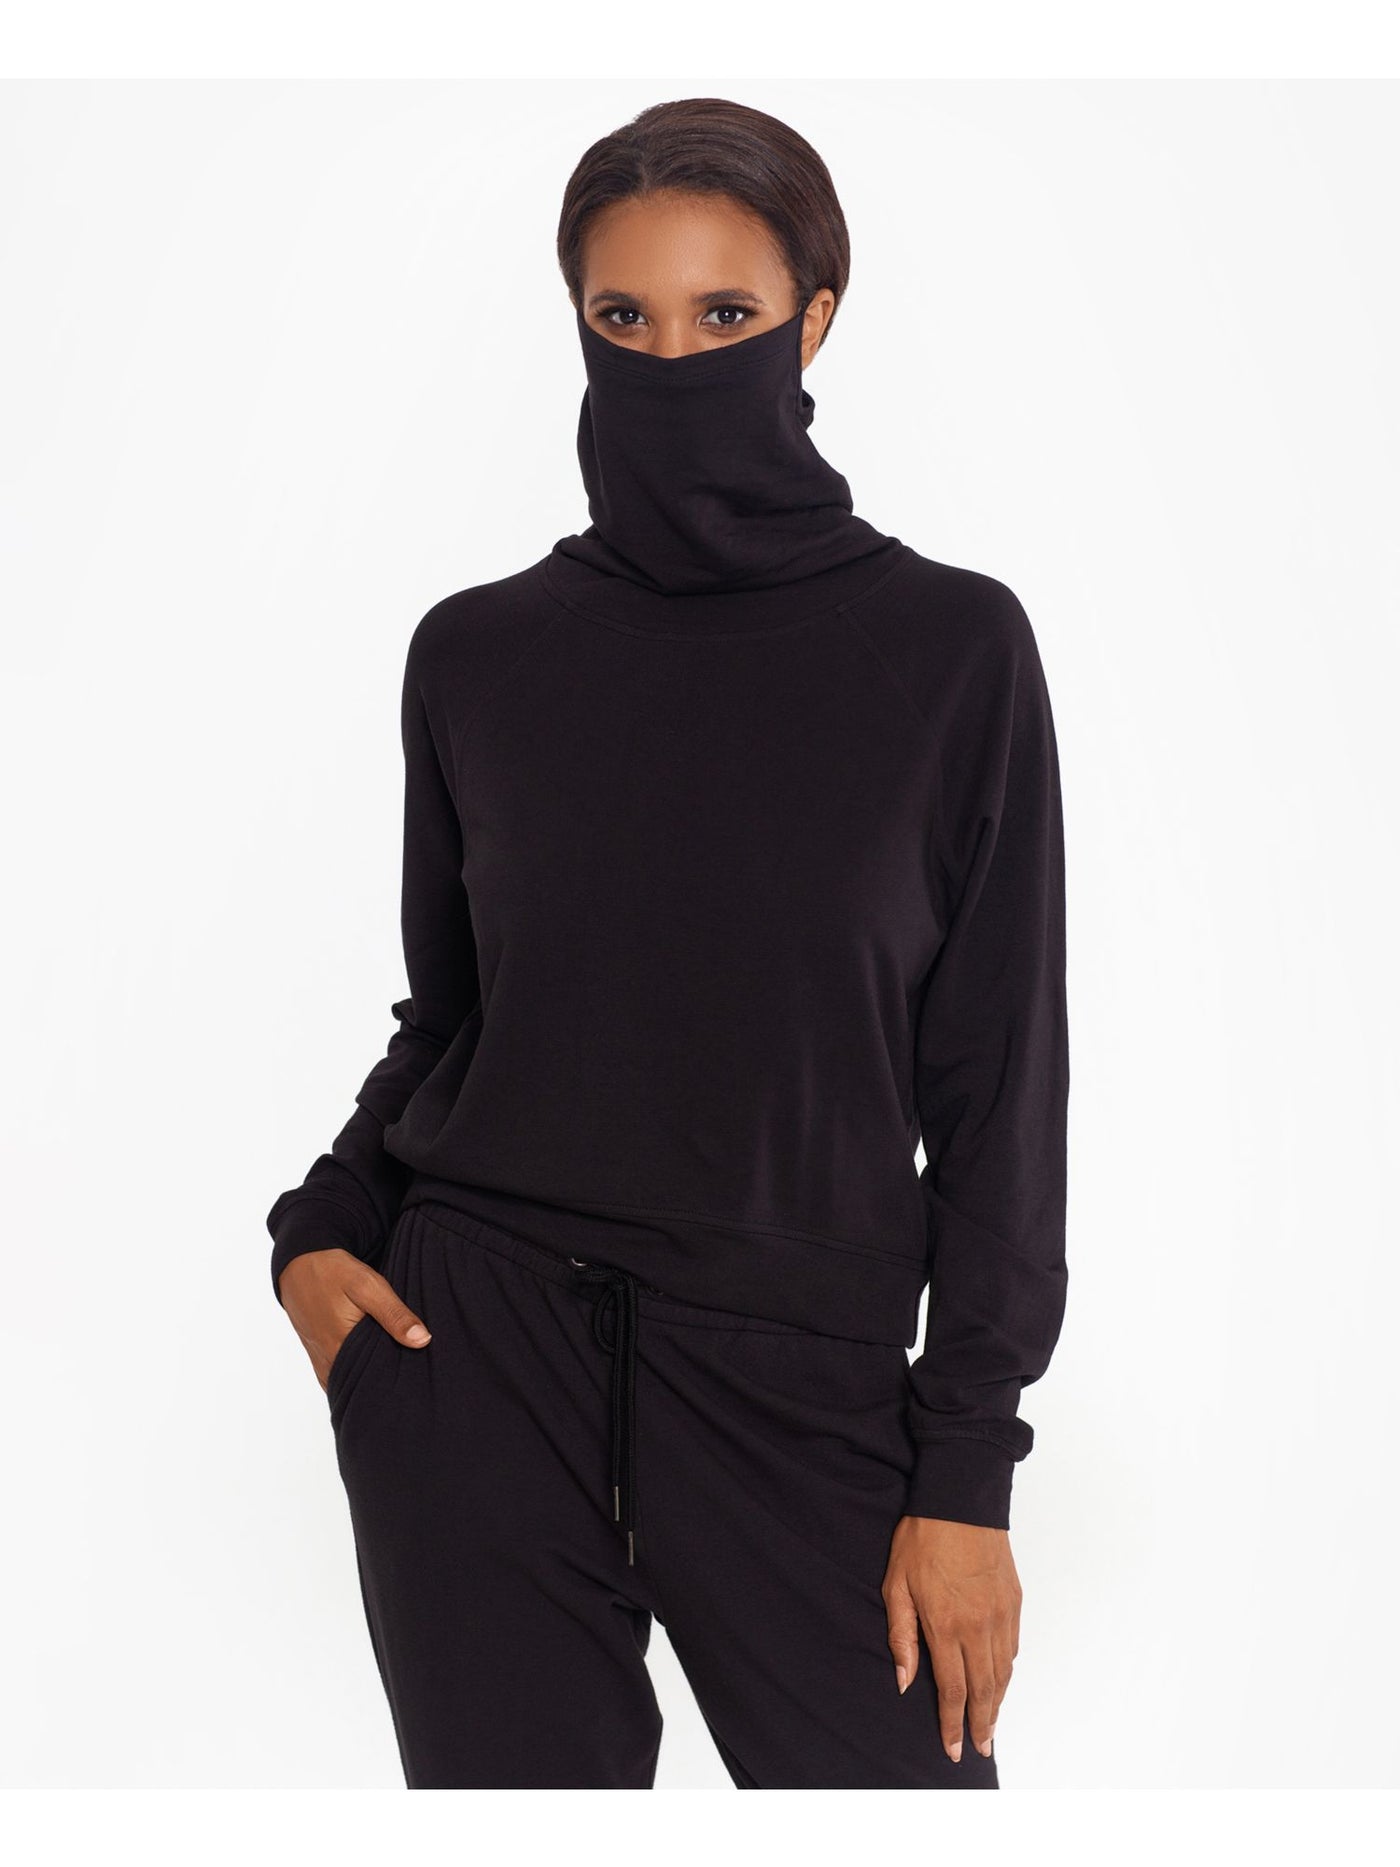 BAM BY BETSY & ADAM Womens Black Stretch Pocketed Sweatshirt XS